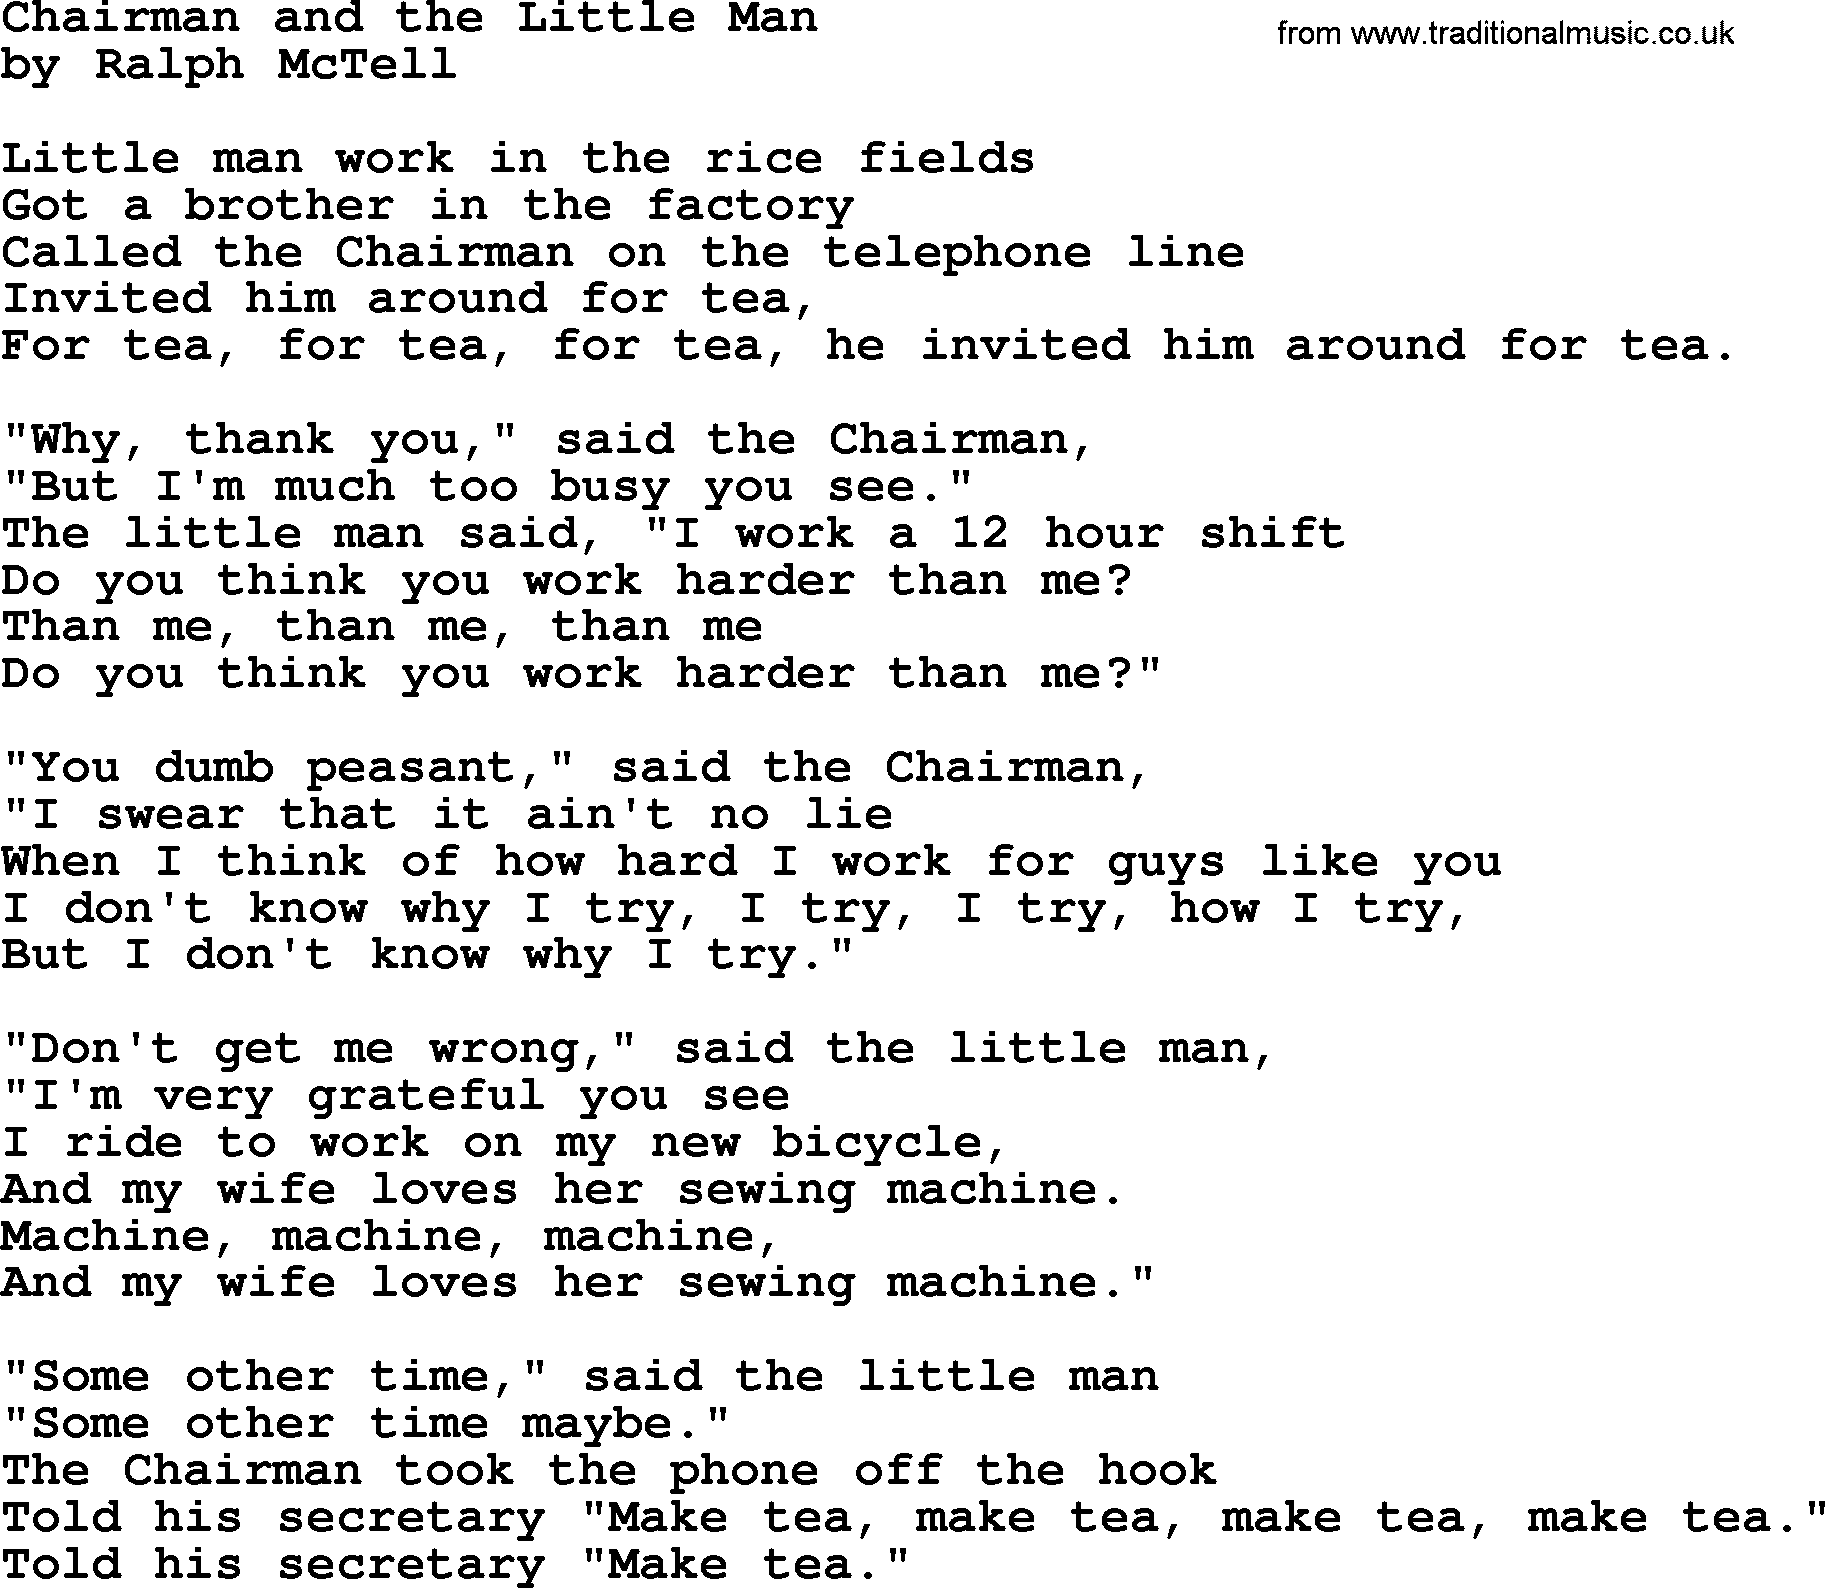 Ralph McTell Song: Chairman And The Little Man, lyrics